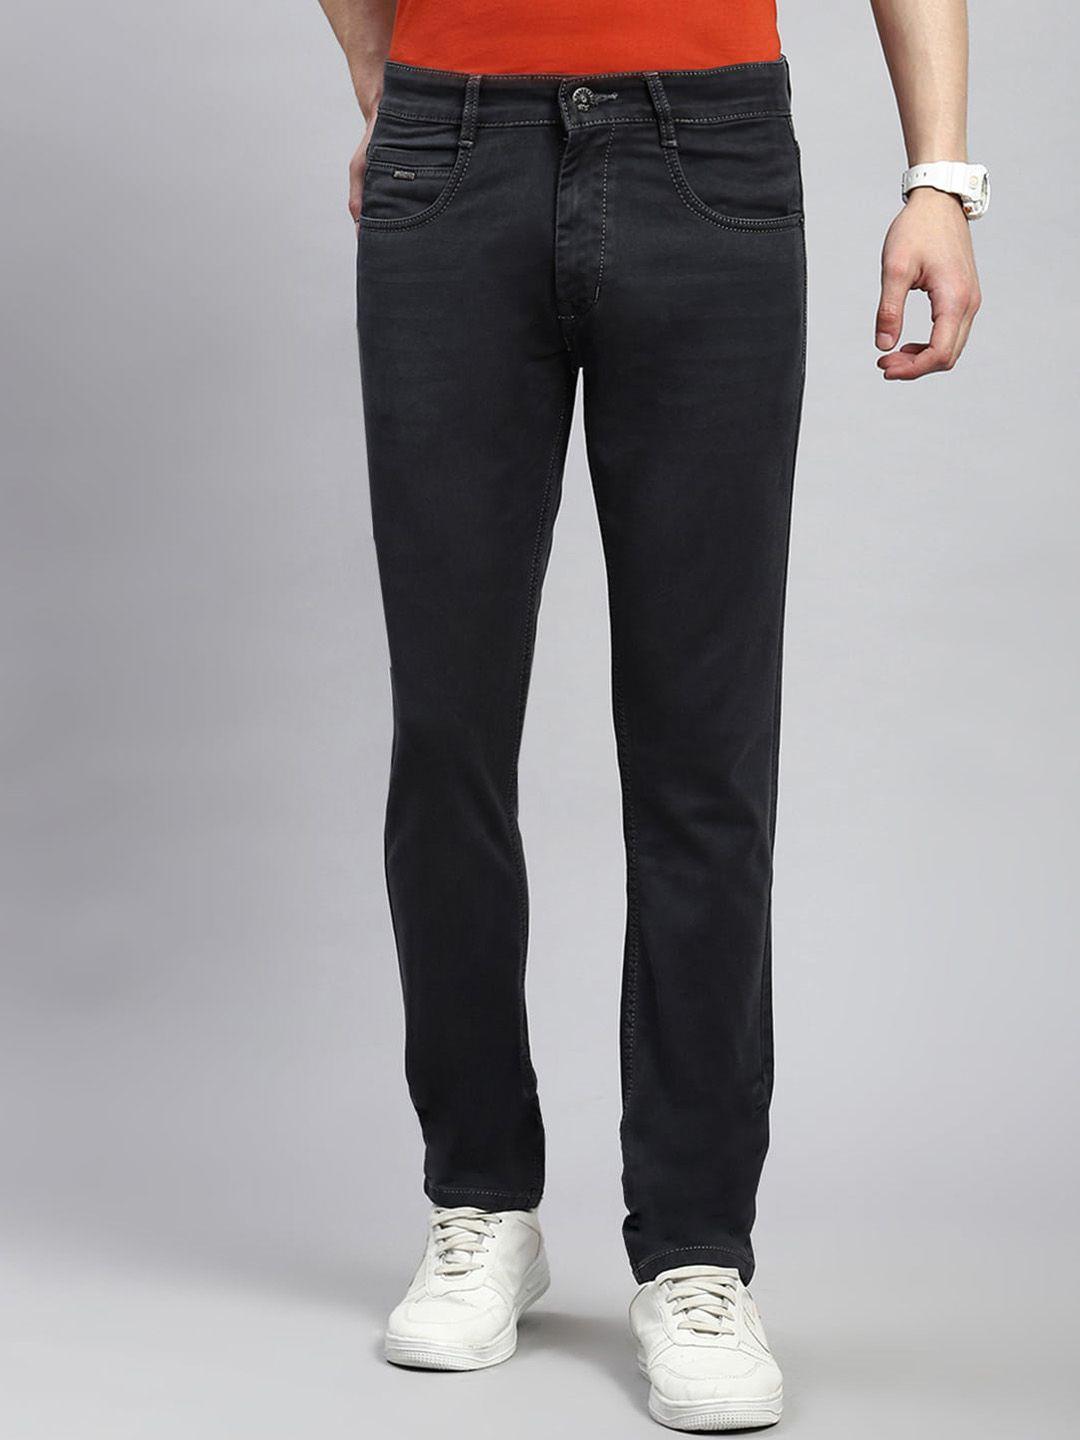 monte-carlo-narrow-men-clean-look-straight-fit-jeans